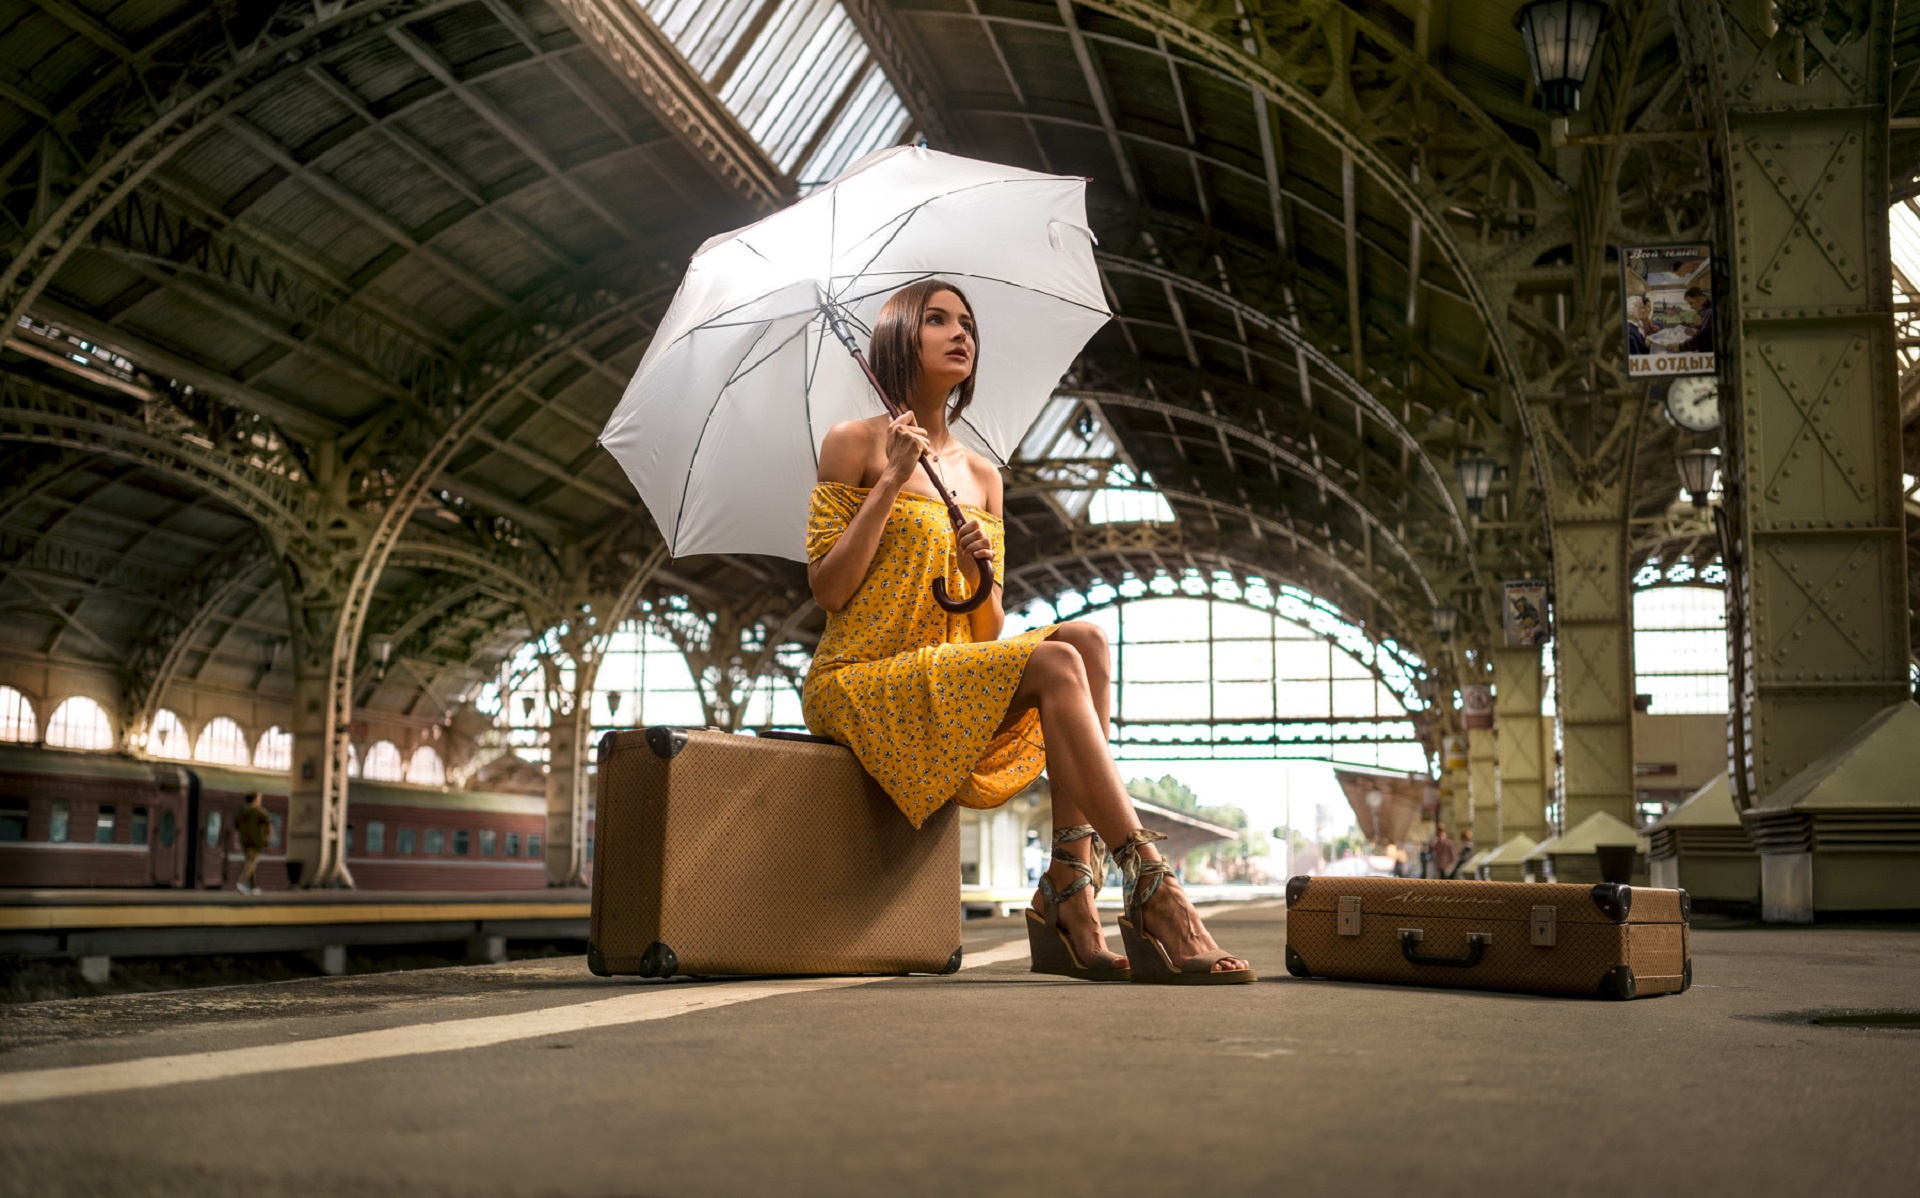 Umbrella dress. Девушка с чемоданом. Фотосессия на вокзале с чемоданом. Девушка на вокзале с чемоданом. Фотосессия на вокзале девушка.